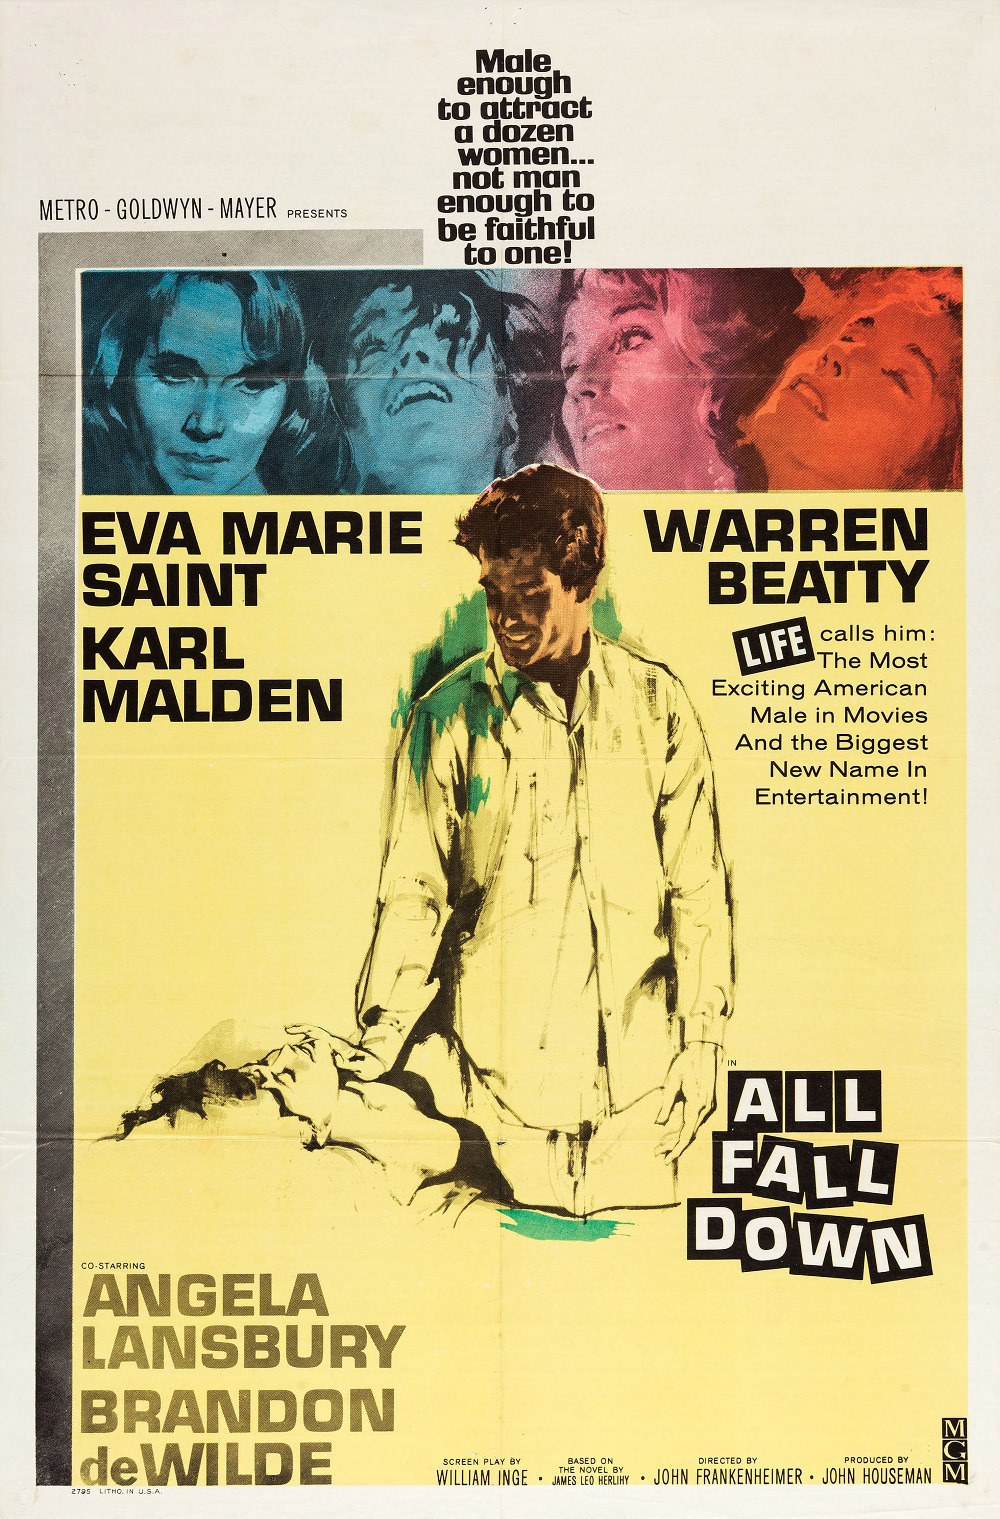 All Fall Down (1962) starring Eva Marie Saint on DVD on DVD